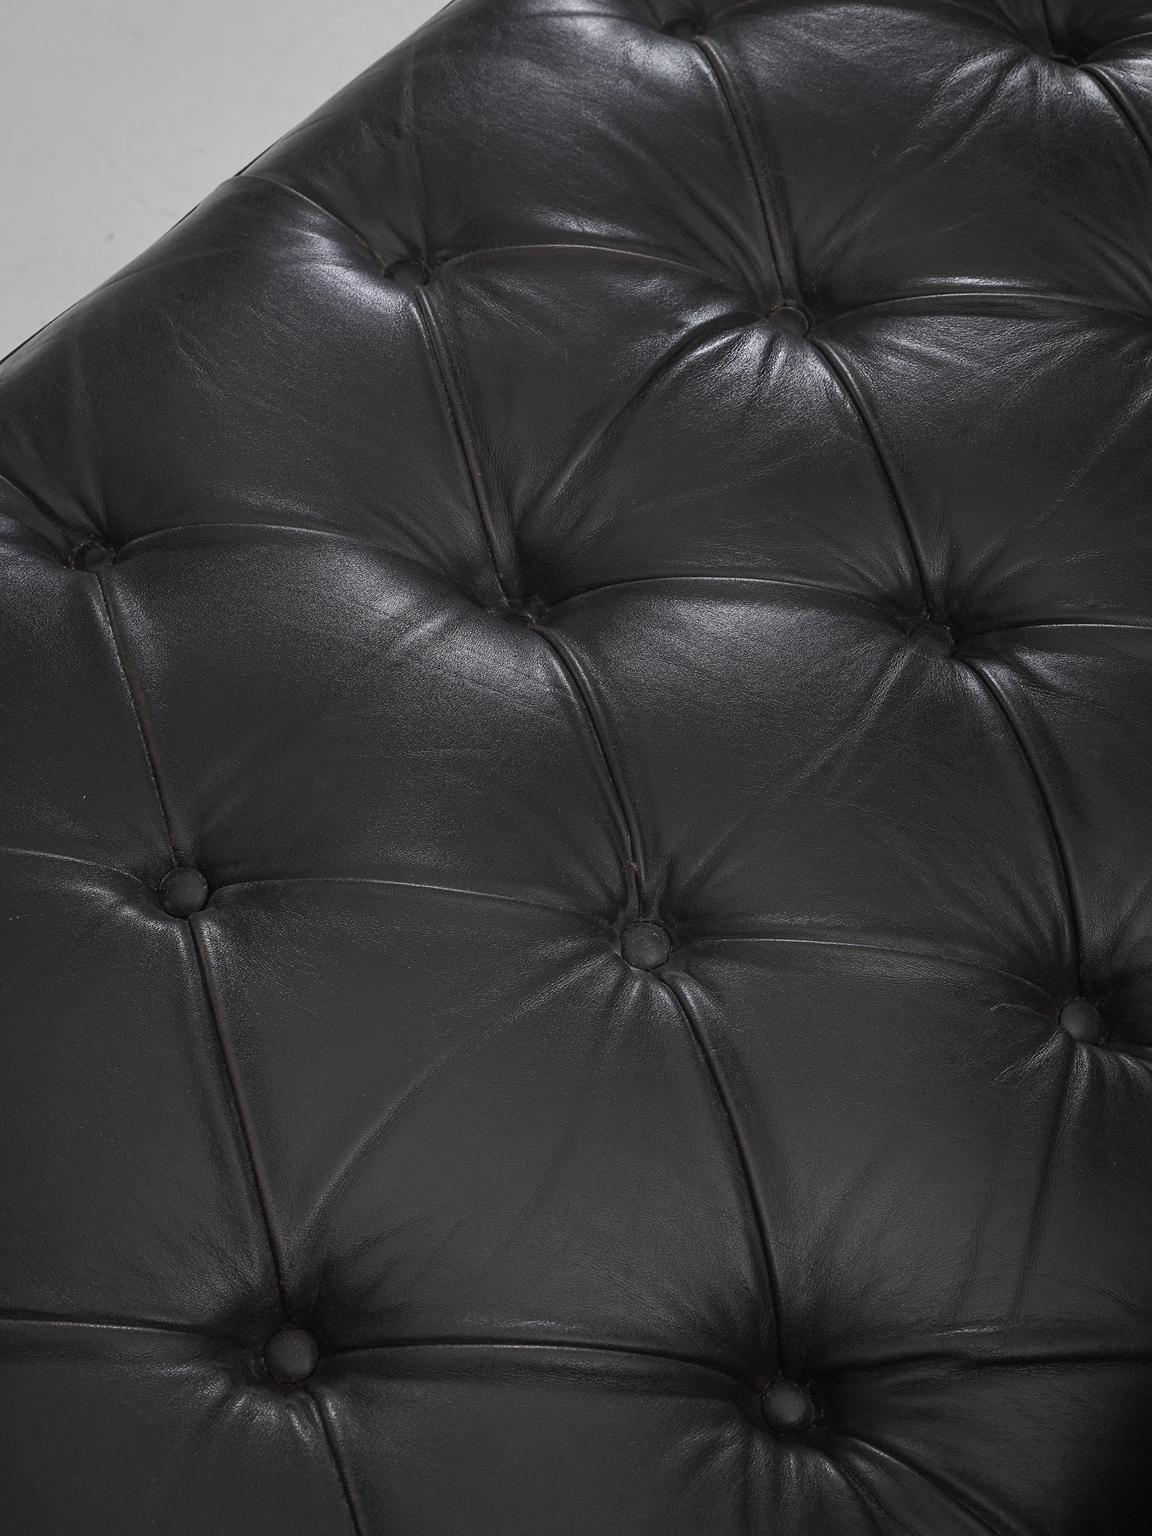 Late 20th Century Robert Haussmann Tufted Sofa in Black Leather